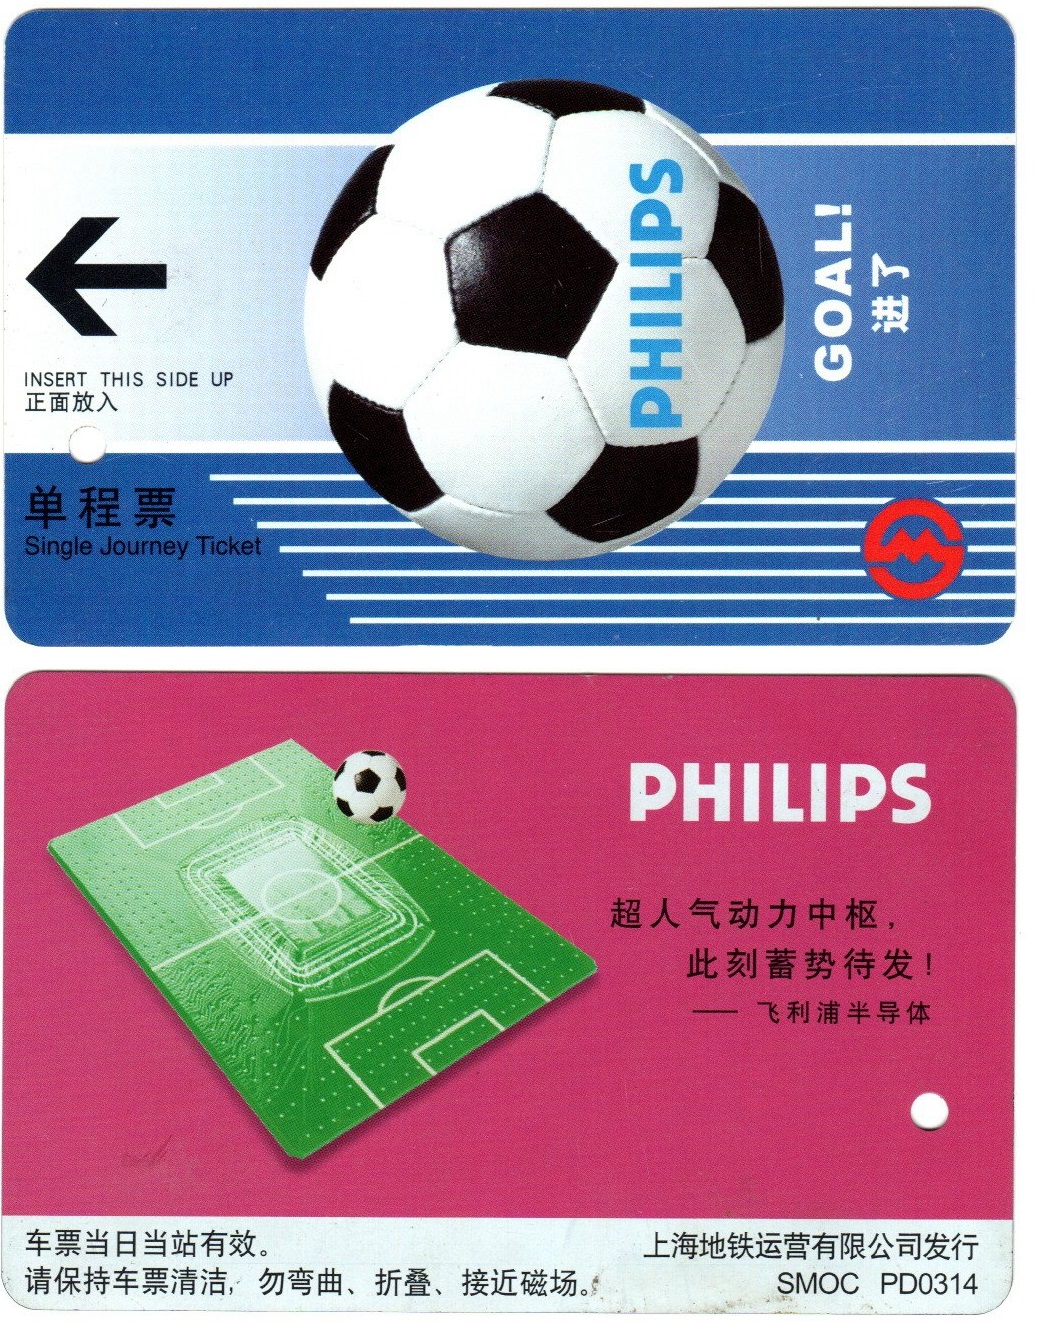 T5050, "Shanghai 2013 Football Goal", Metro Card (Subway Ticket), One-Way